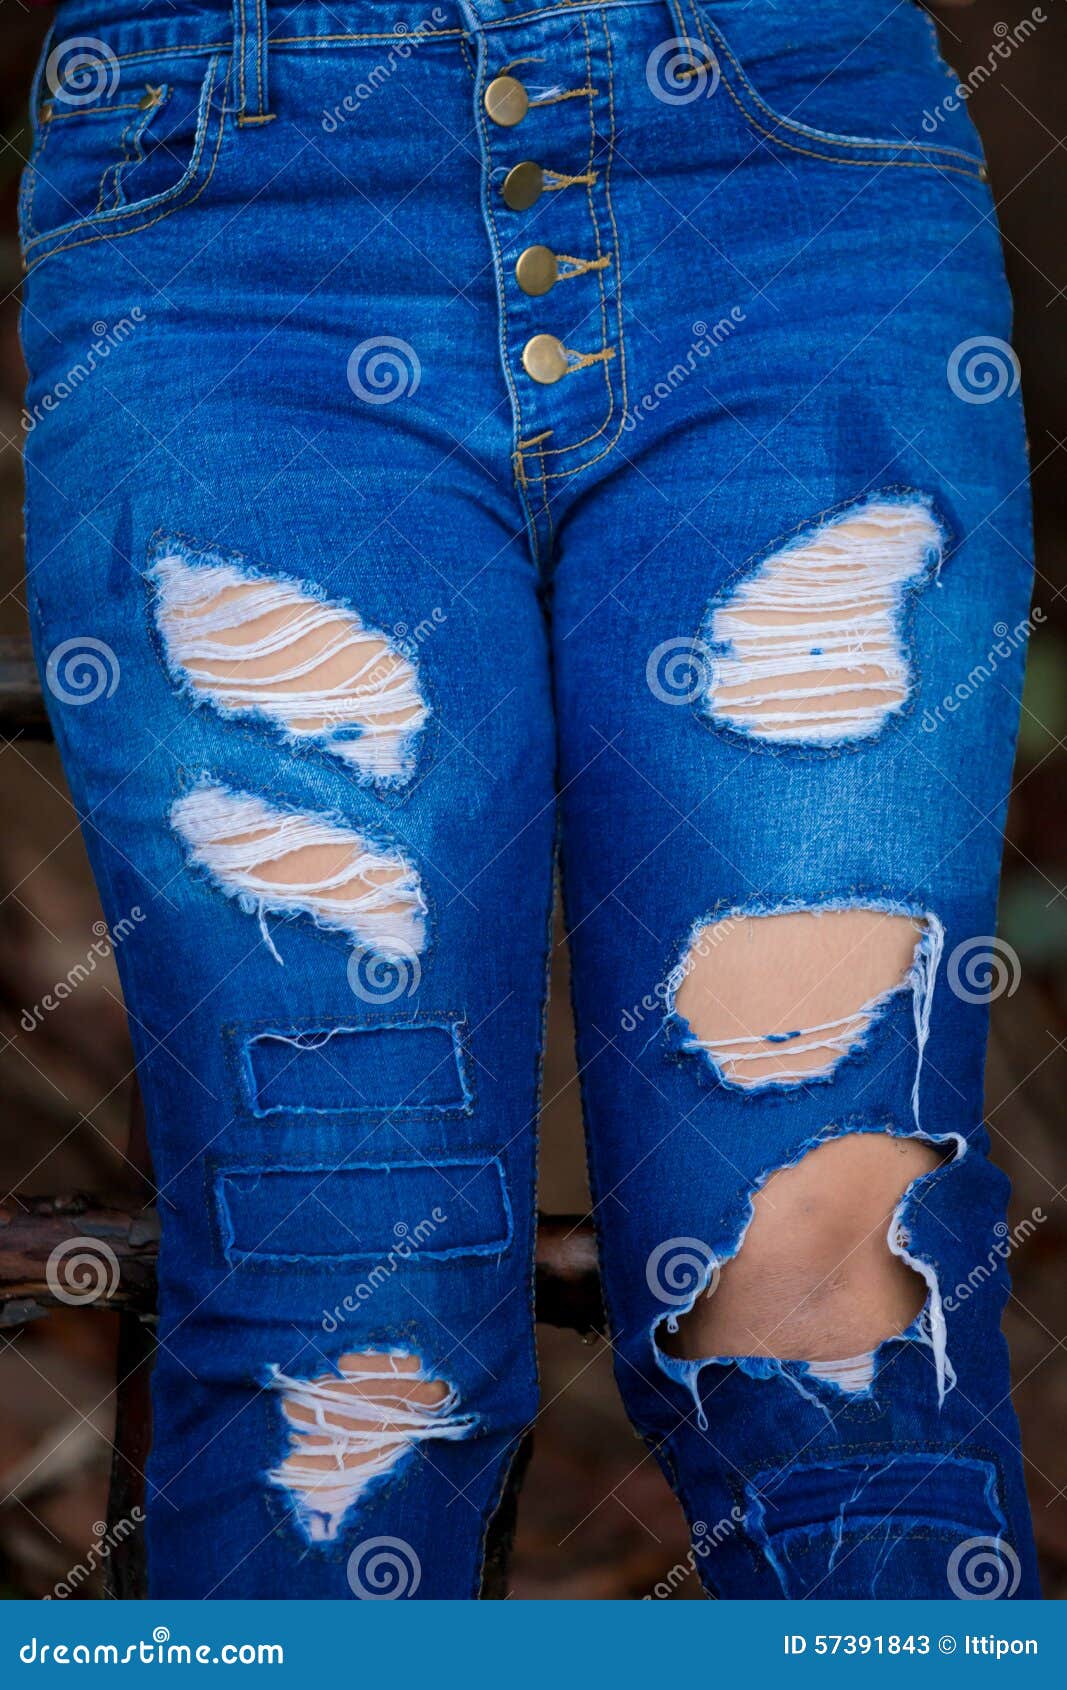 Tear of jeans stock image. Image of denim, pattern, damaged - 57391843